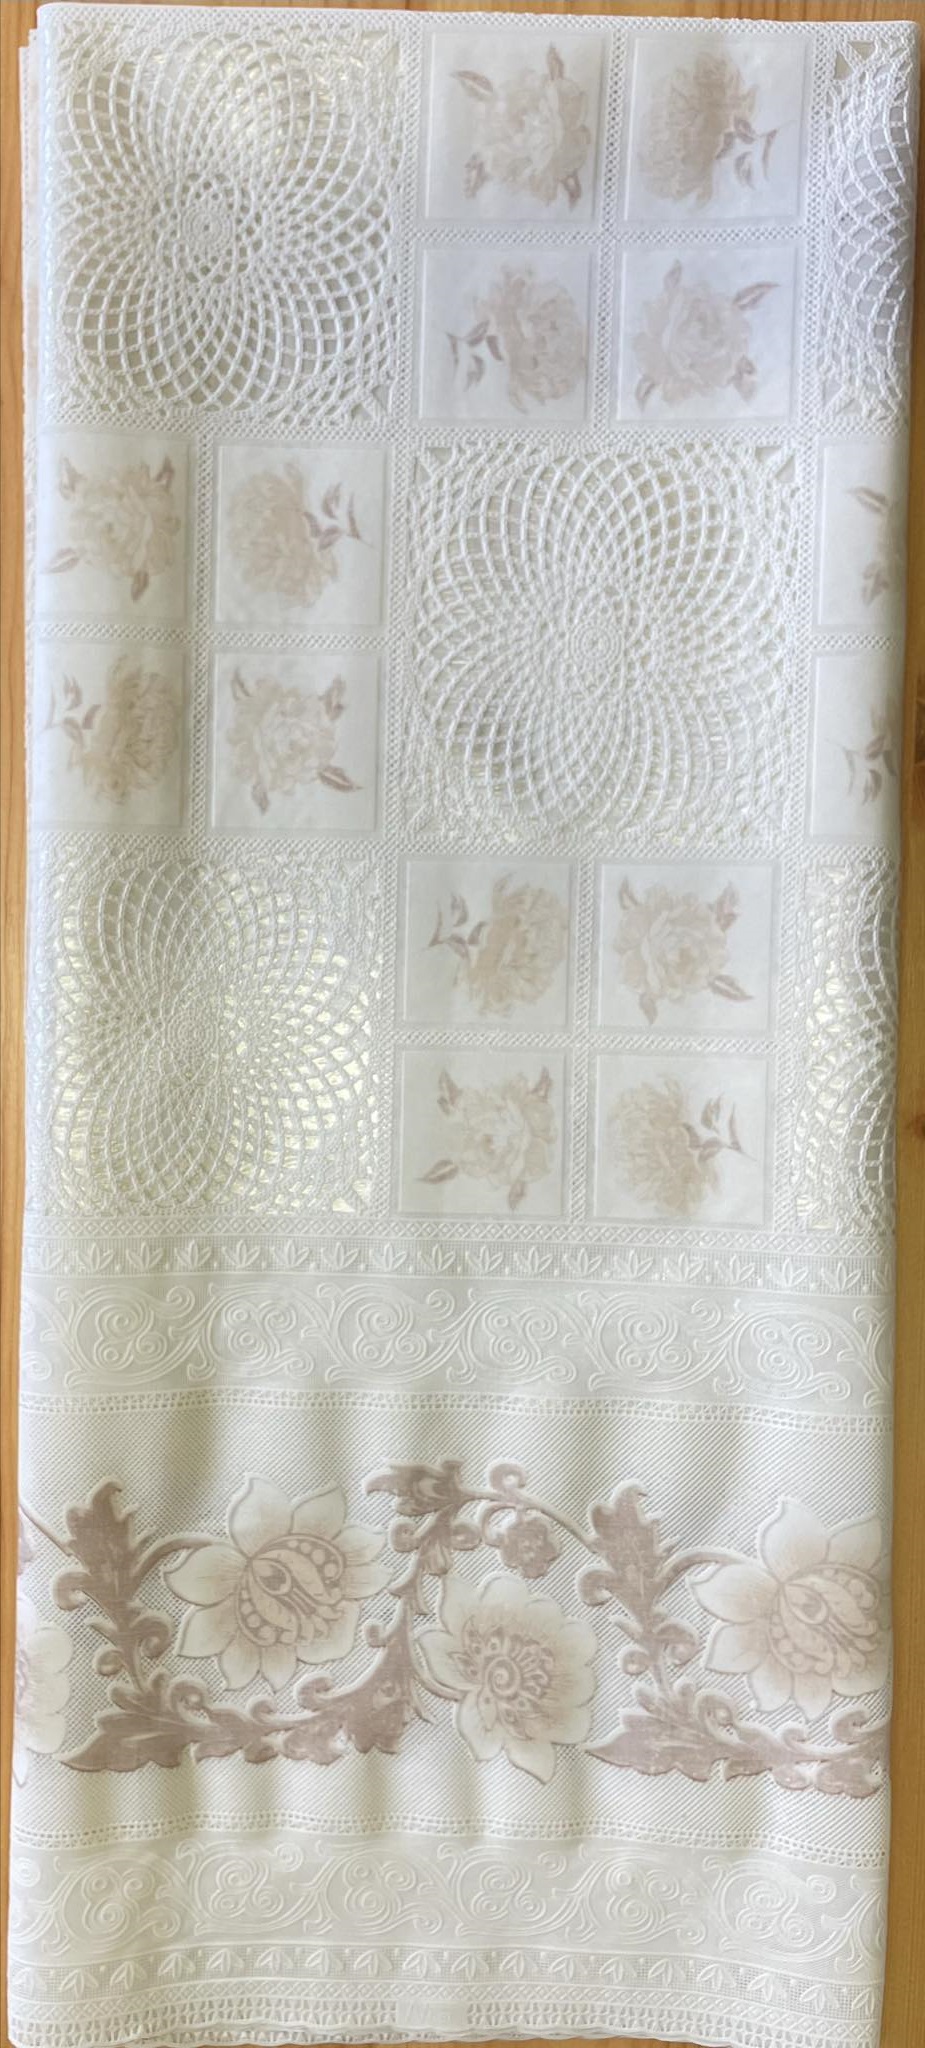 Top textil PVC ubrus béžový 140x180 cm